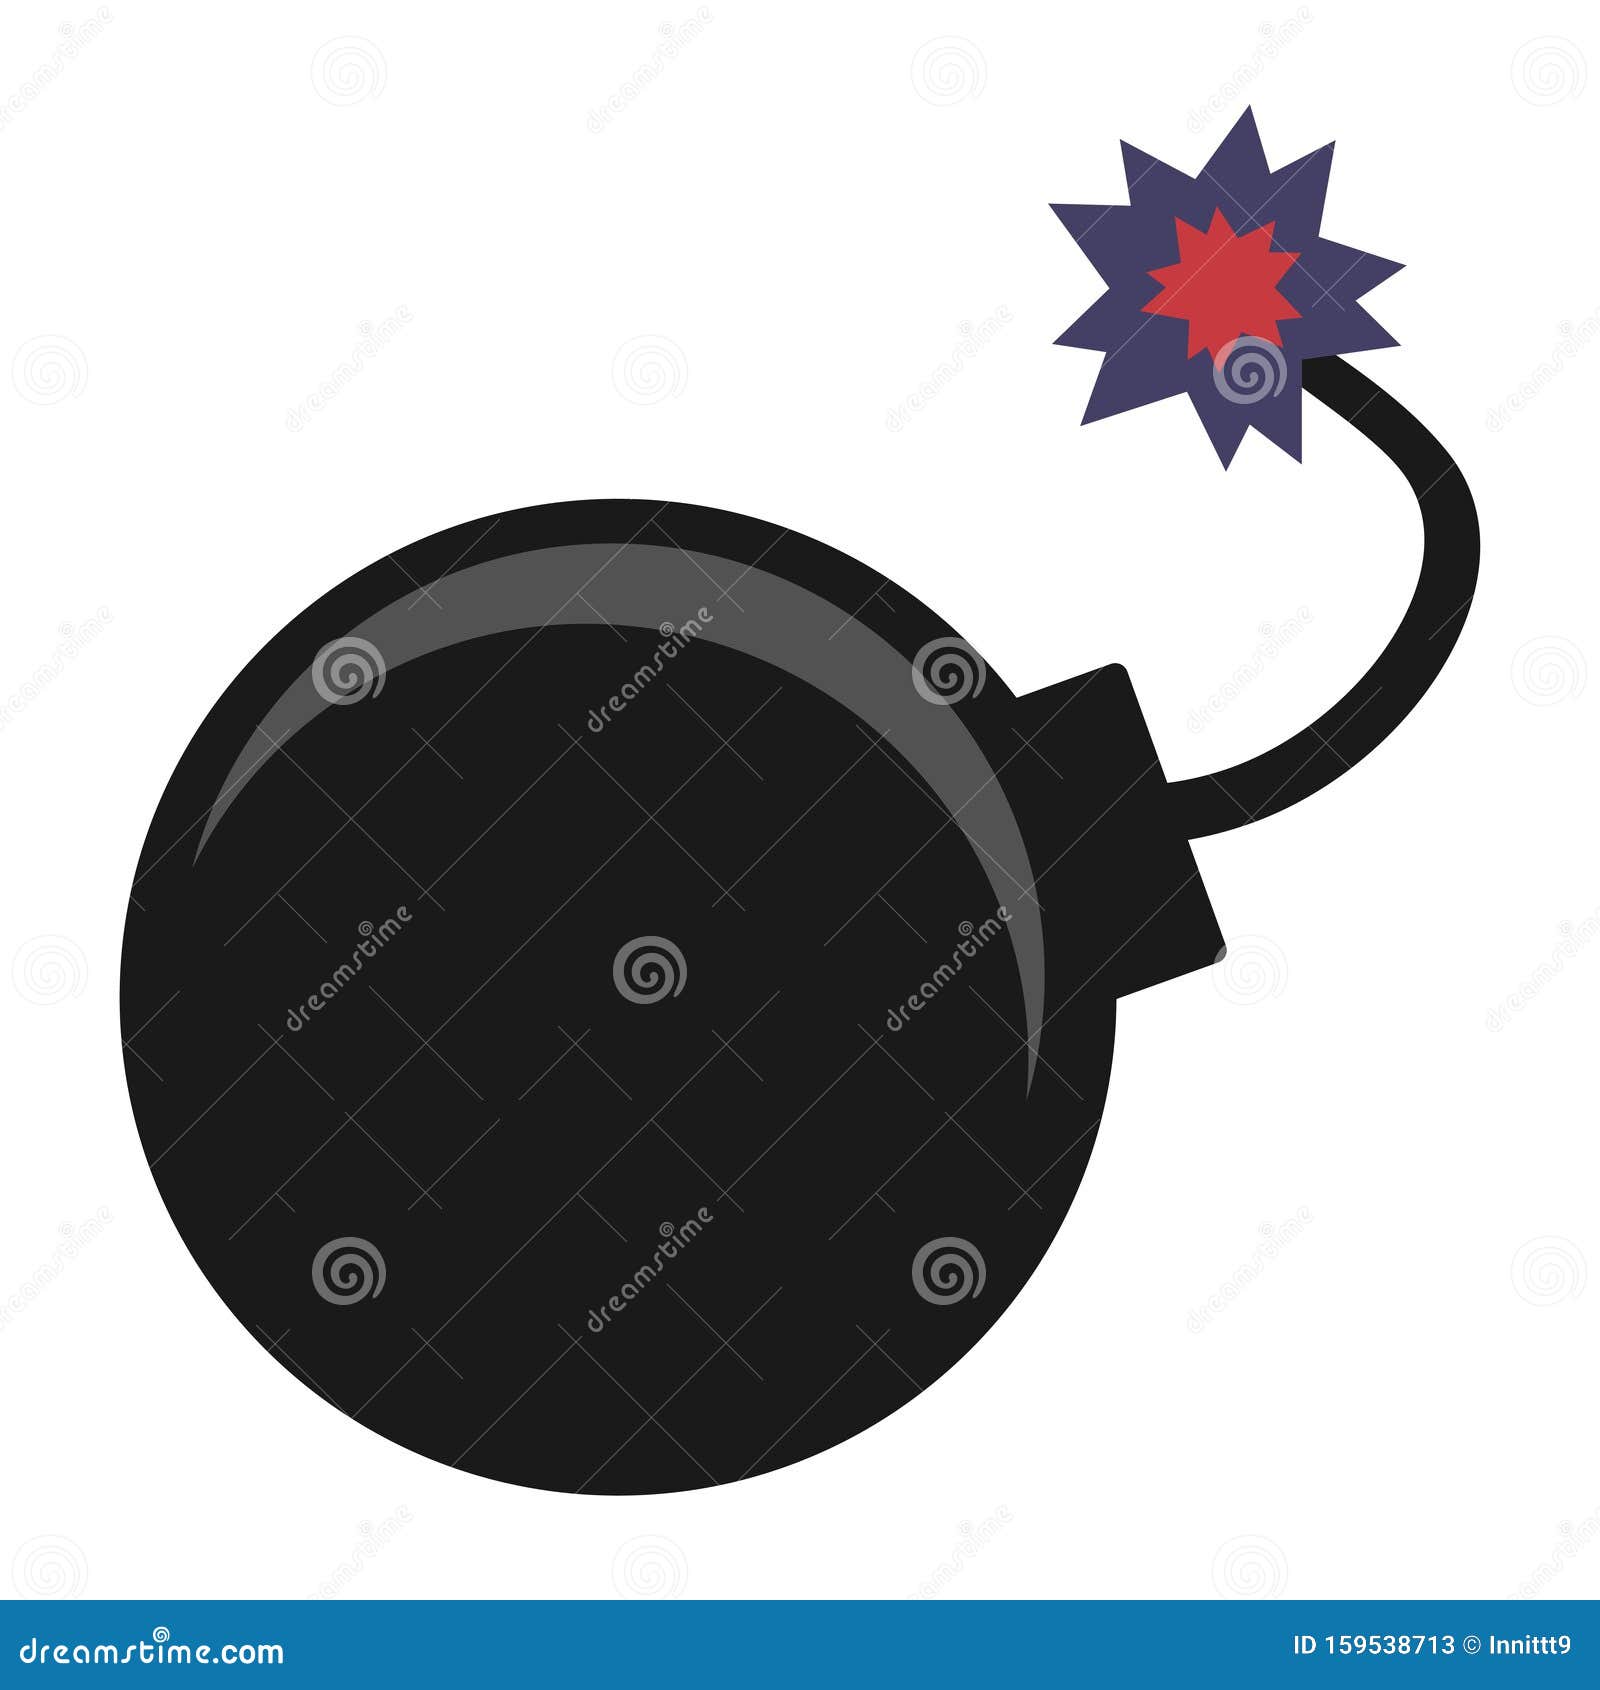 Firecracker Explosive Device Bomb Or Explosion Icon Stock Illustration Illustration Of Fireworks Burns 159538713